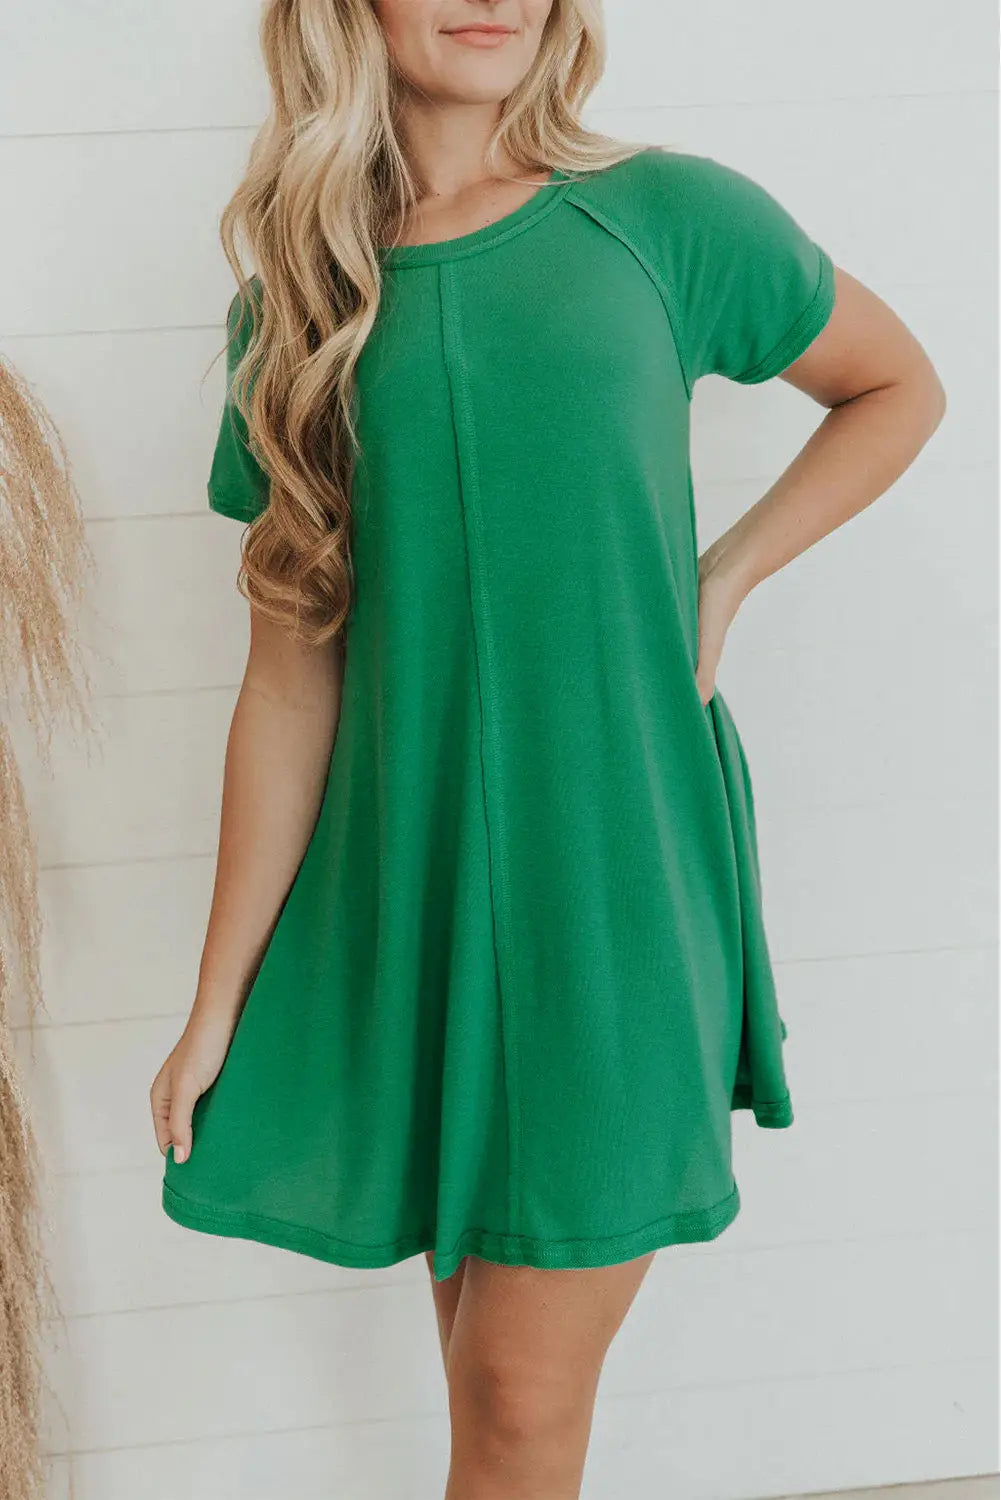 Bright green exposed seam t-shirt dress - s / 85% polyester + 10% cotton + 5% elastane - dresses/t shirt dresses